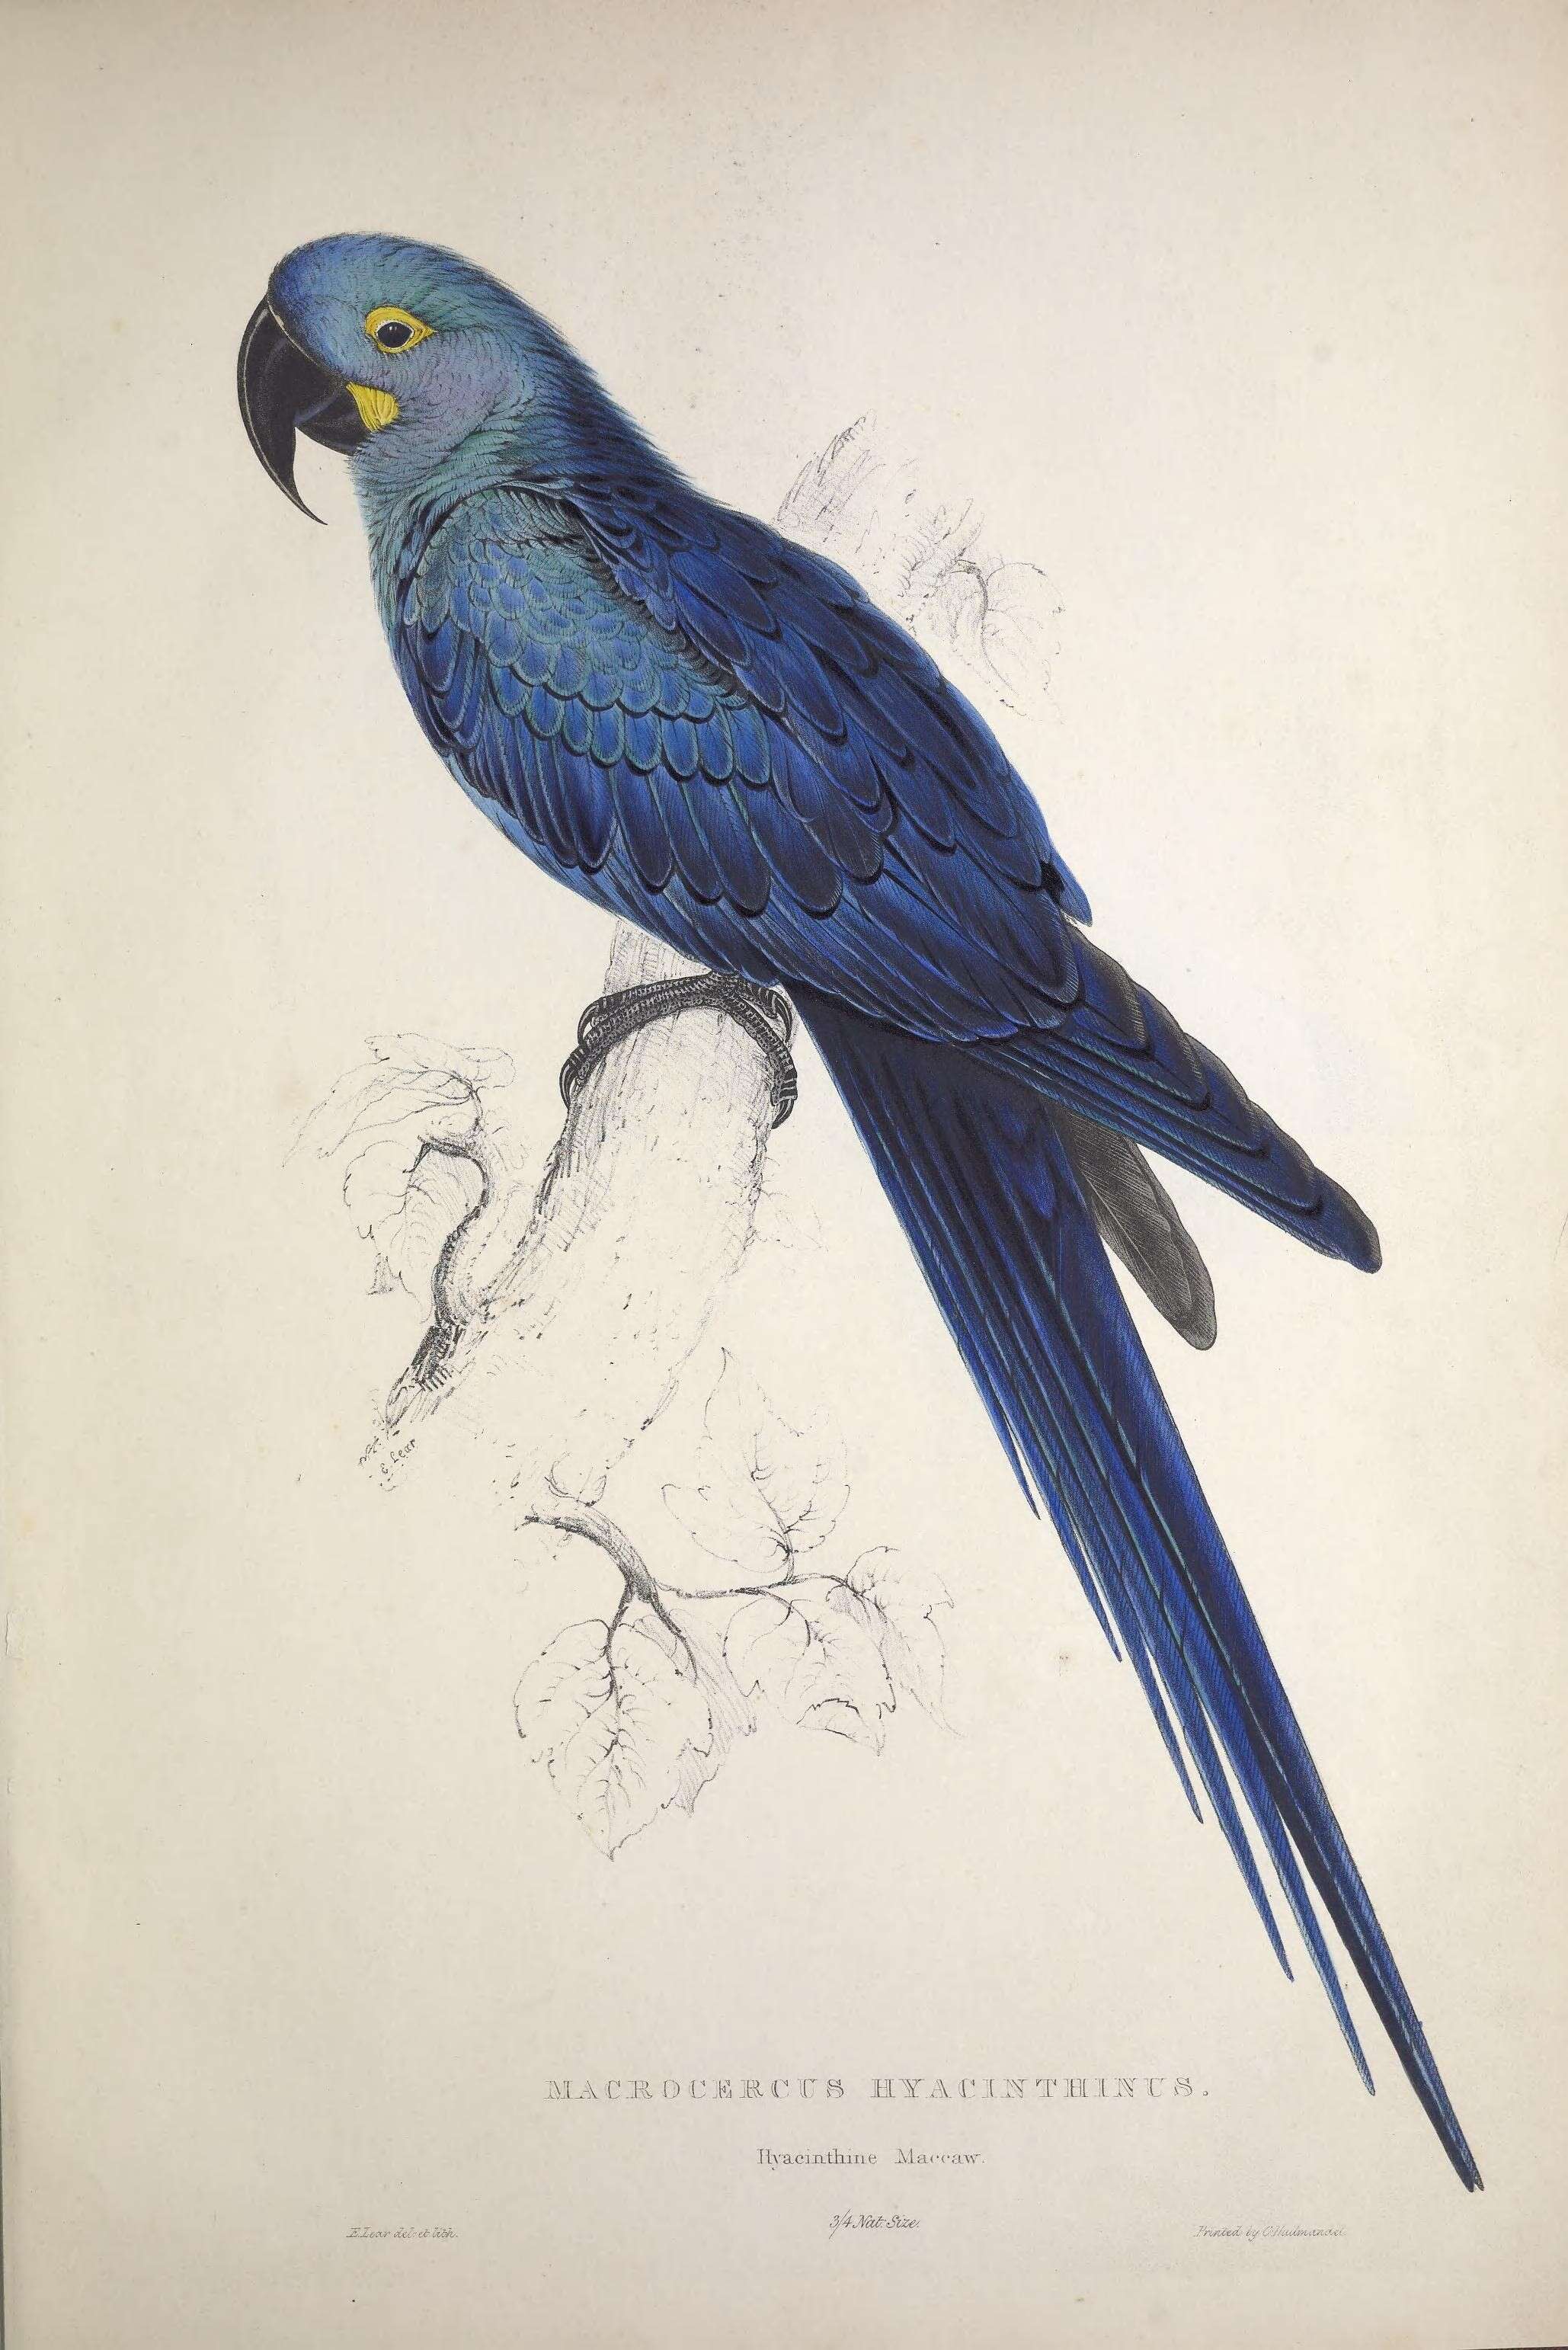 Image of Anodorhynchus Spix 1824